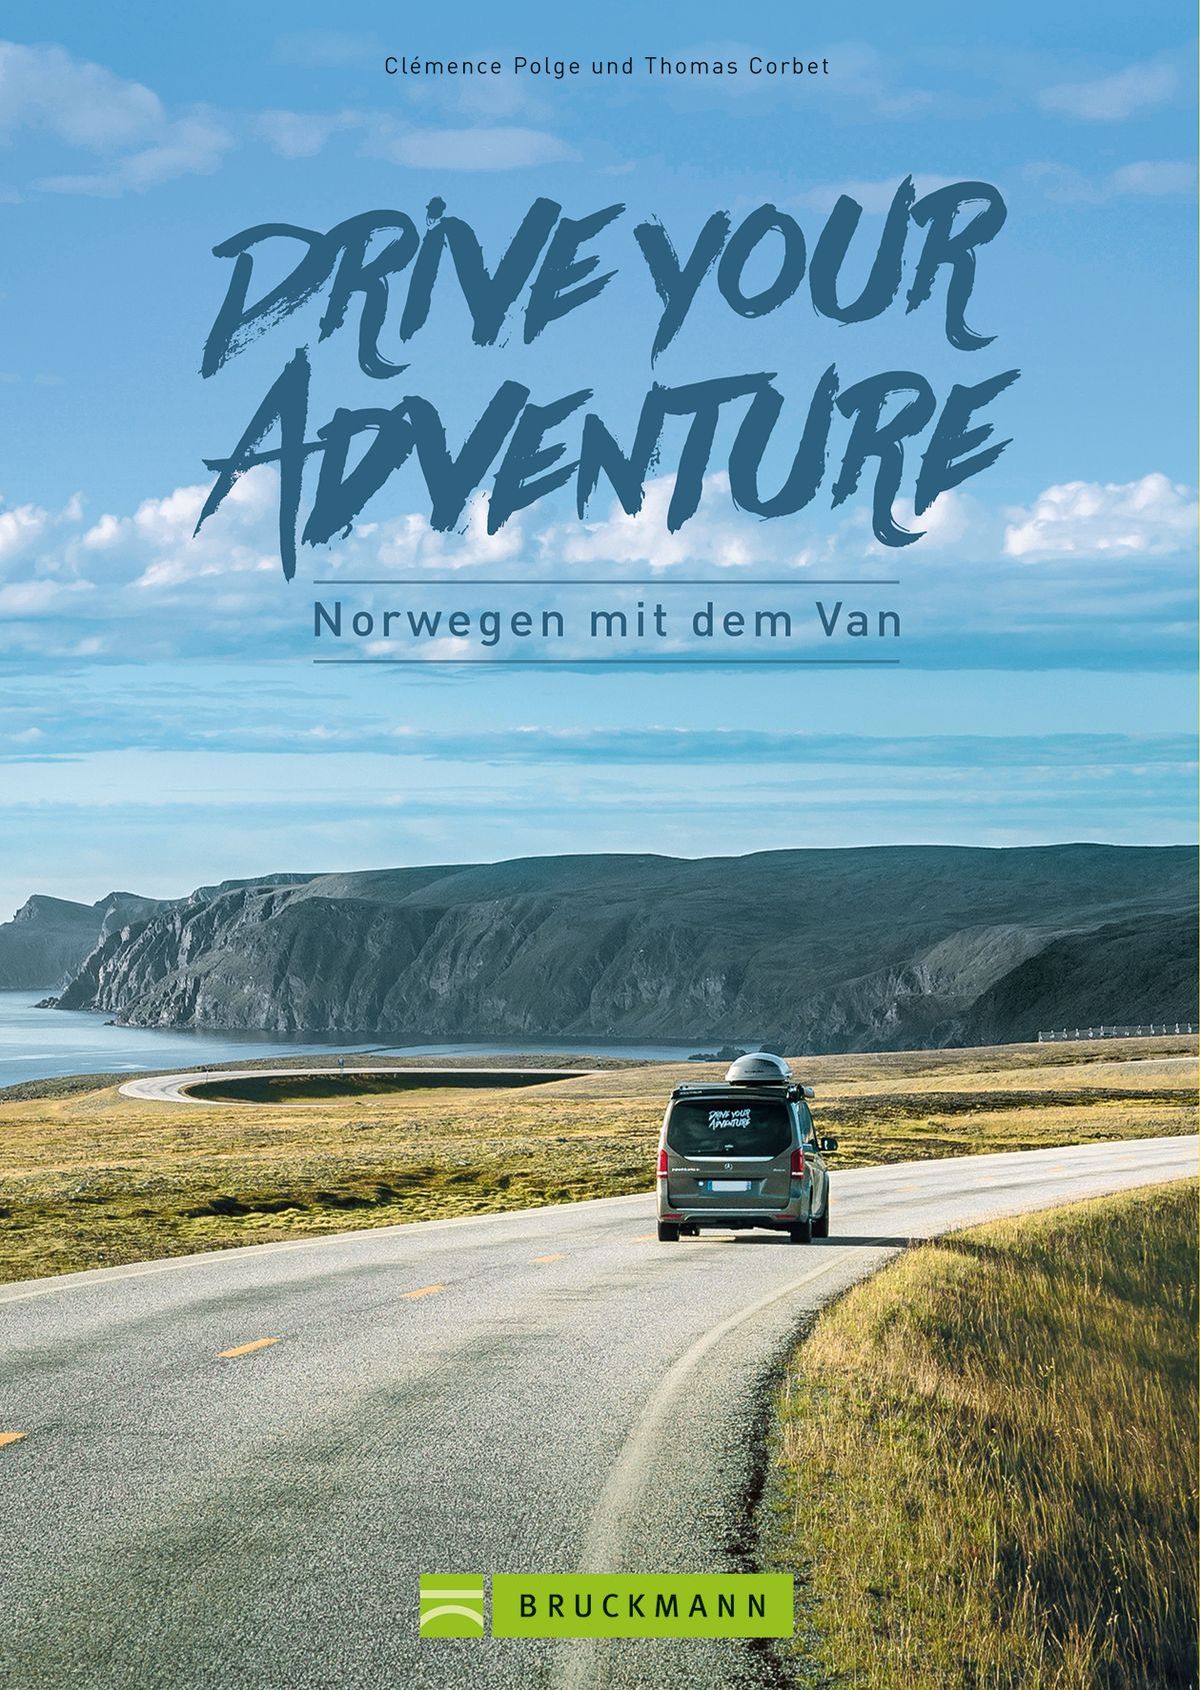 Clémence Polge | Thomas Corbet Drive your Adventure - Norwegen mit dem Van entdecken 224 Seiten | ca. 240 Abb. | 21,99 Euro ISBN: 978-3-7343-2130-6